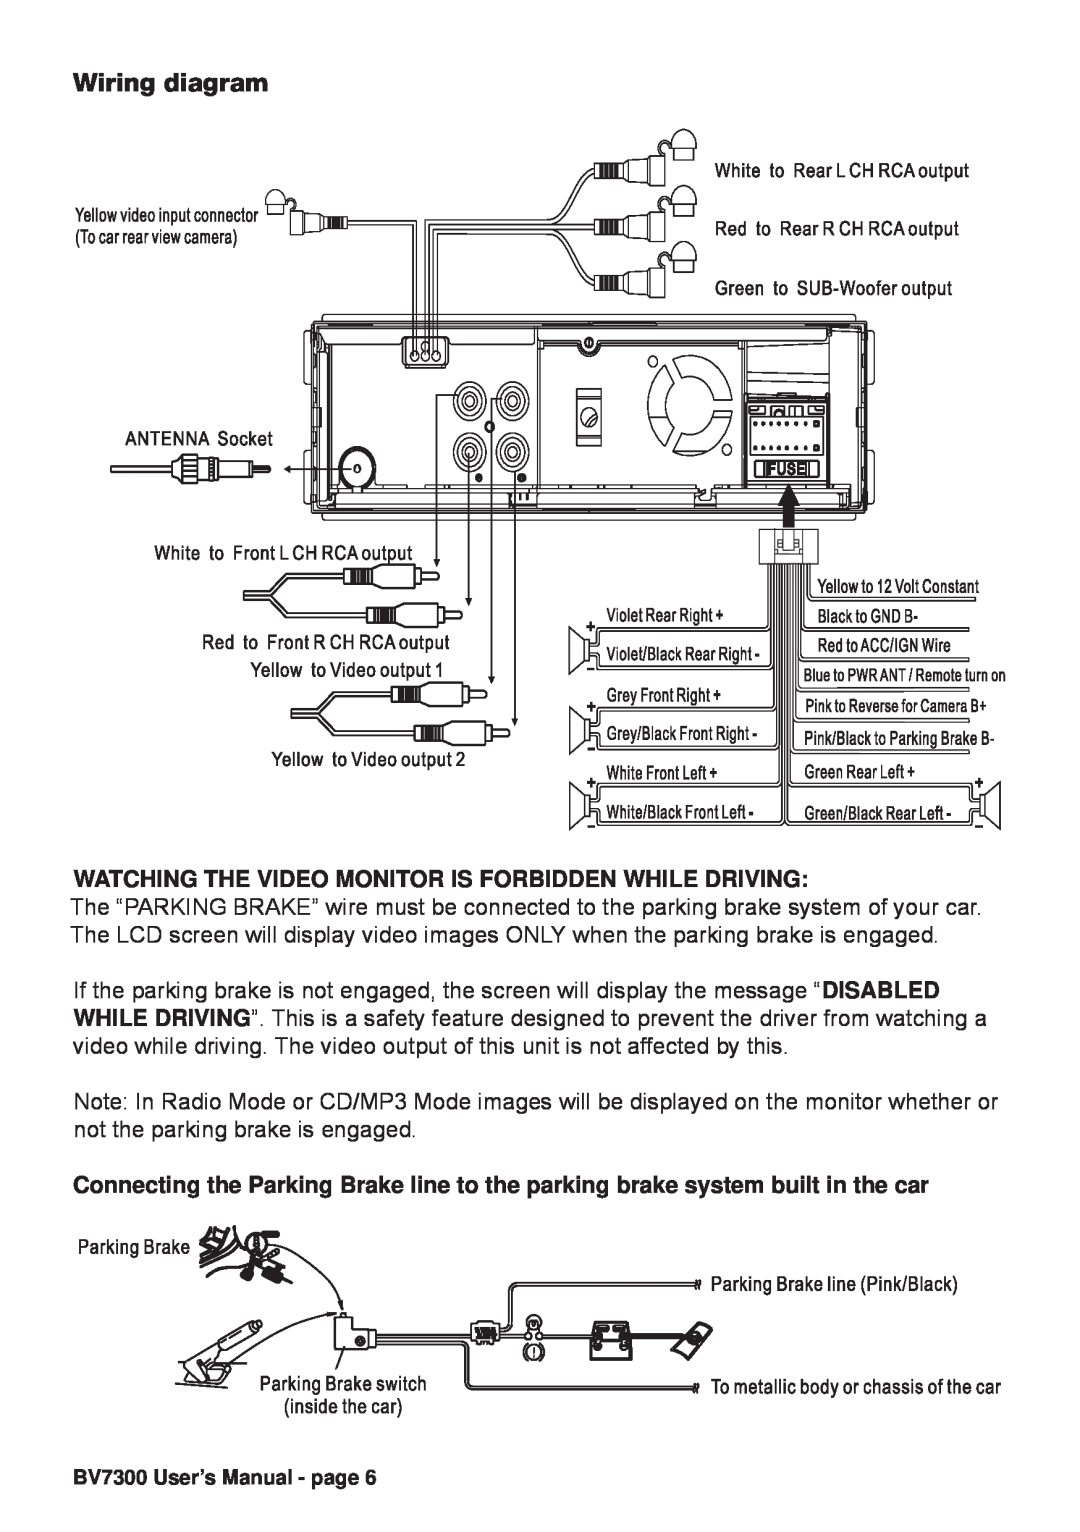 Boss Audio Systems BV7300 manual Wiring diagram 